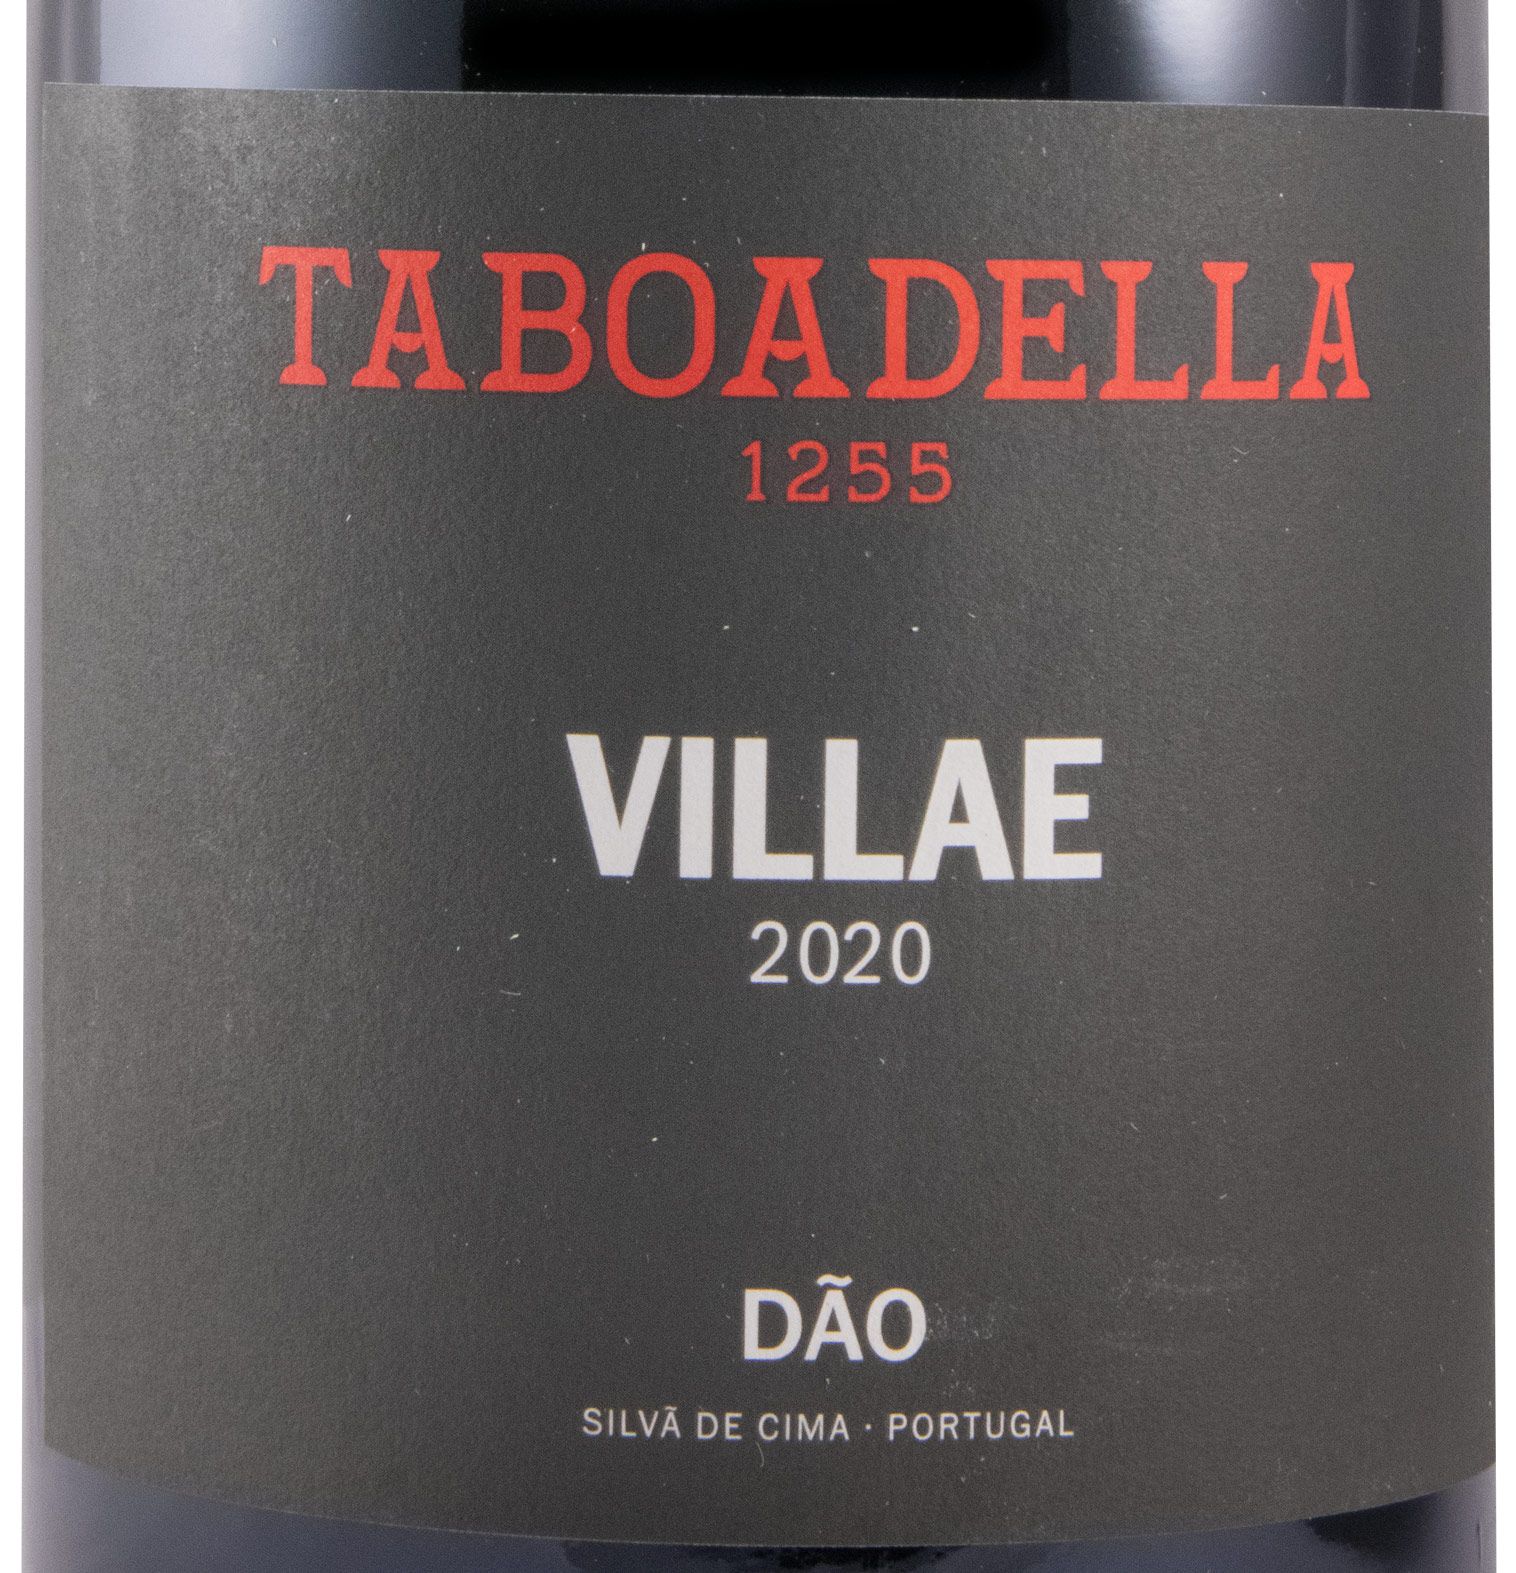 2020 Taboadella Villae tinto 1,5L